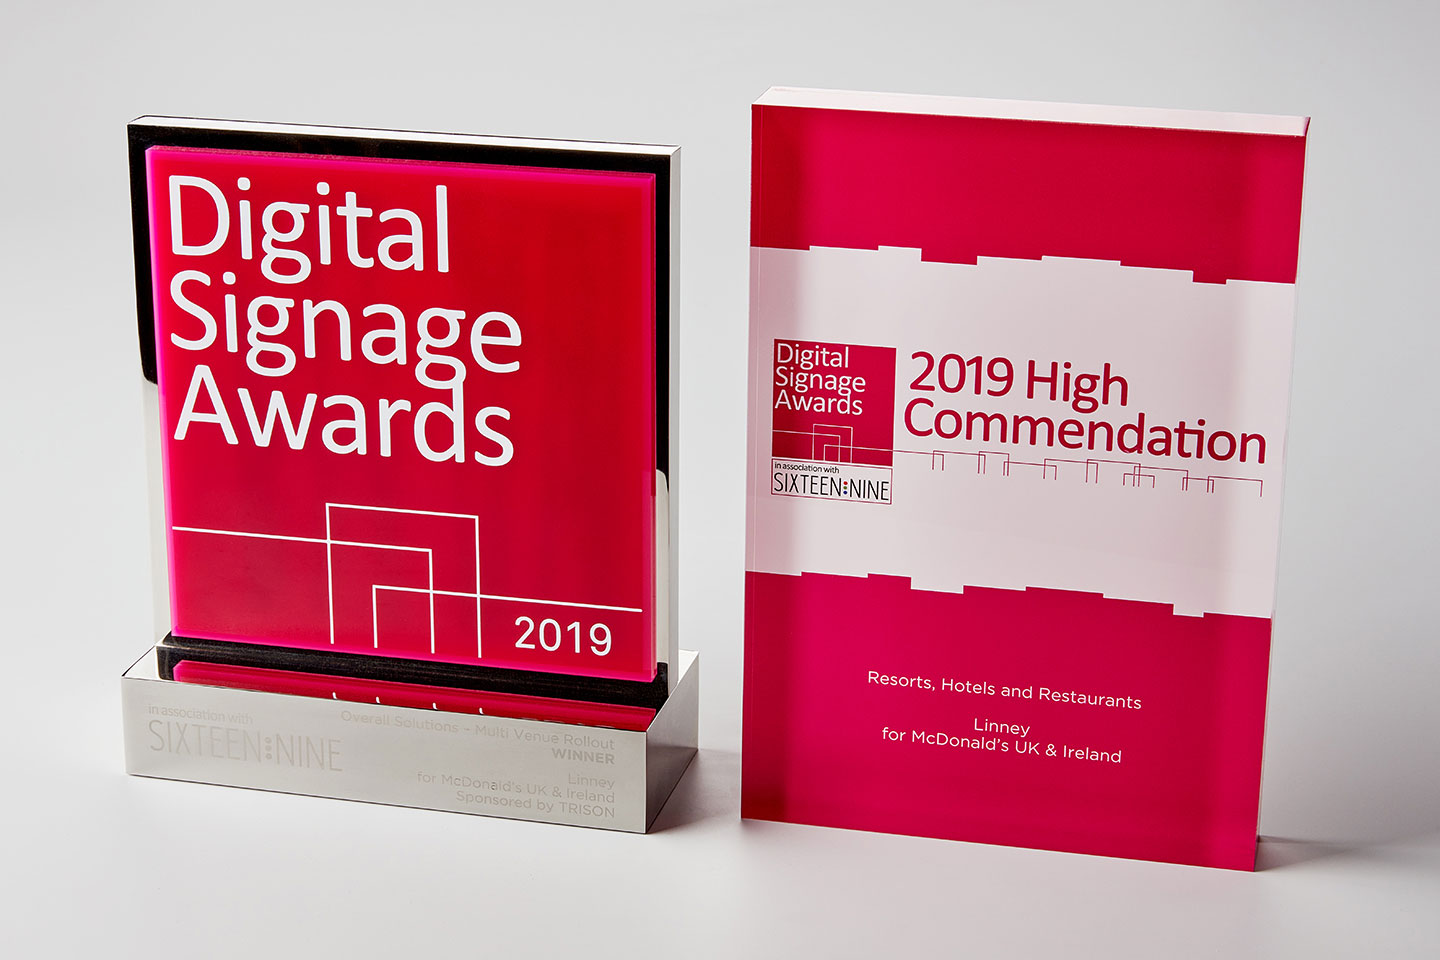 Digital signage awards 2019